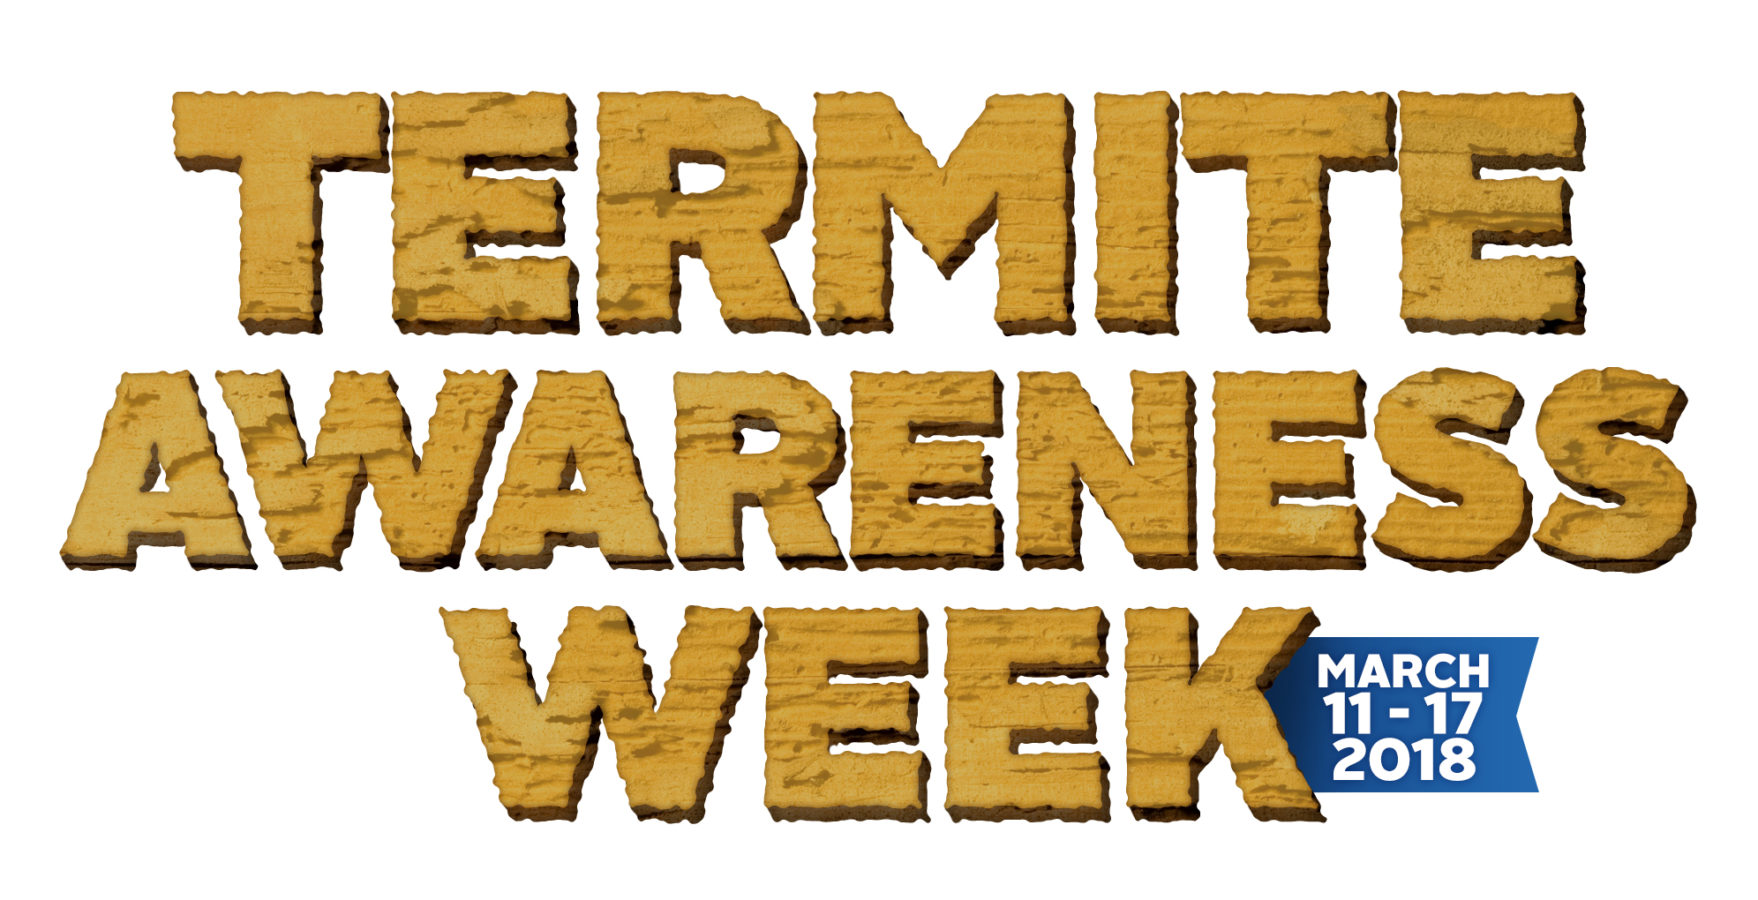 A1 Exterminators Termite Awareness Week